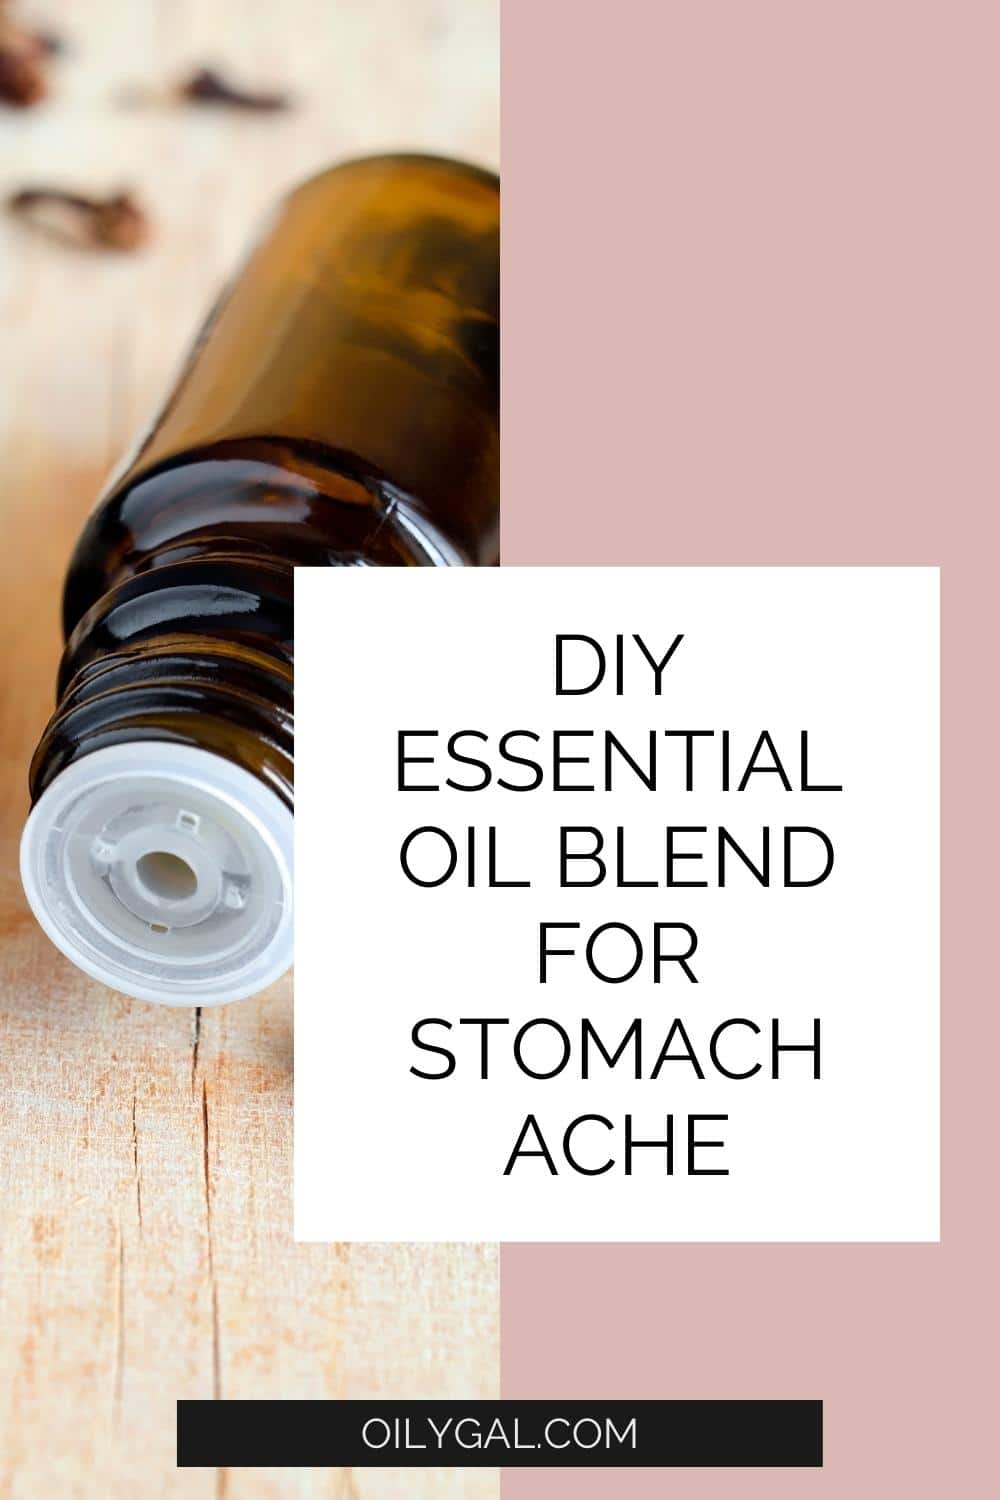 DIY Essential Oil Blend for Stomach Ache